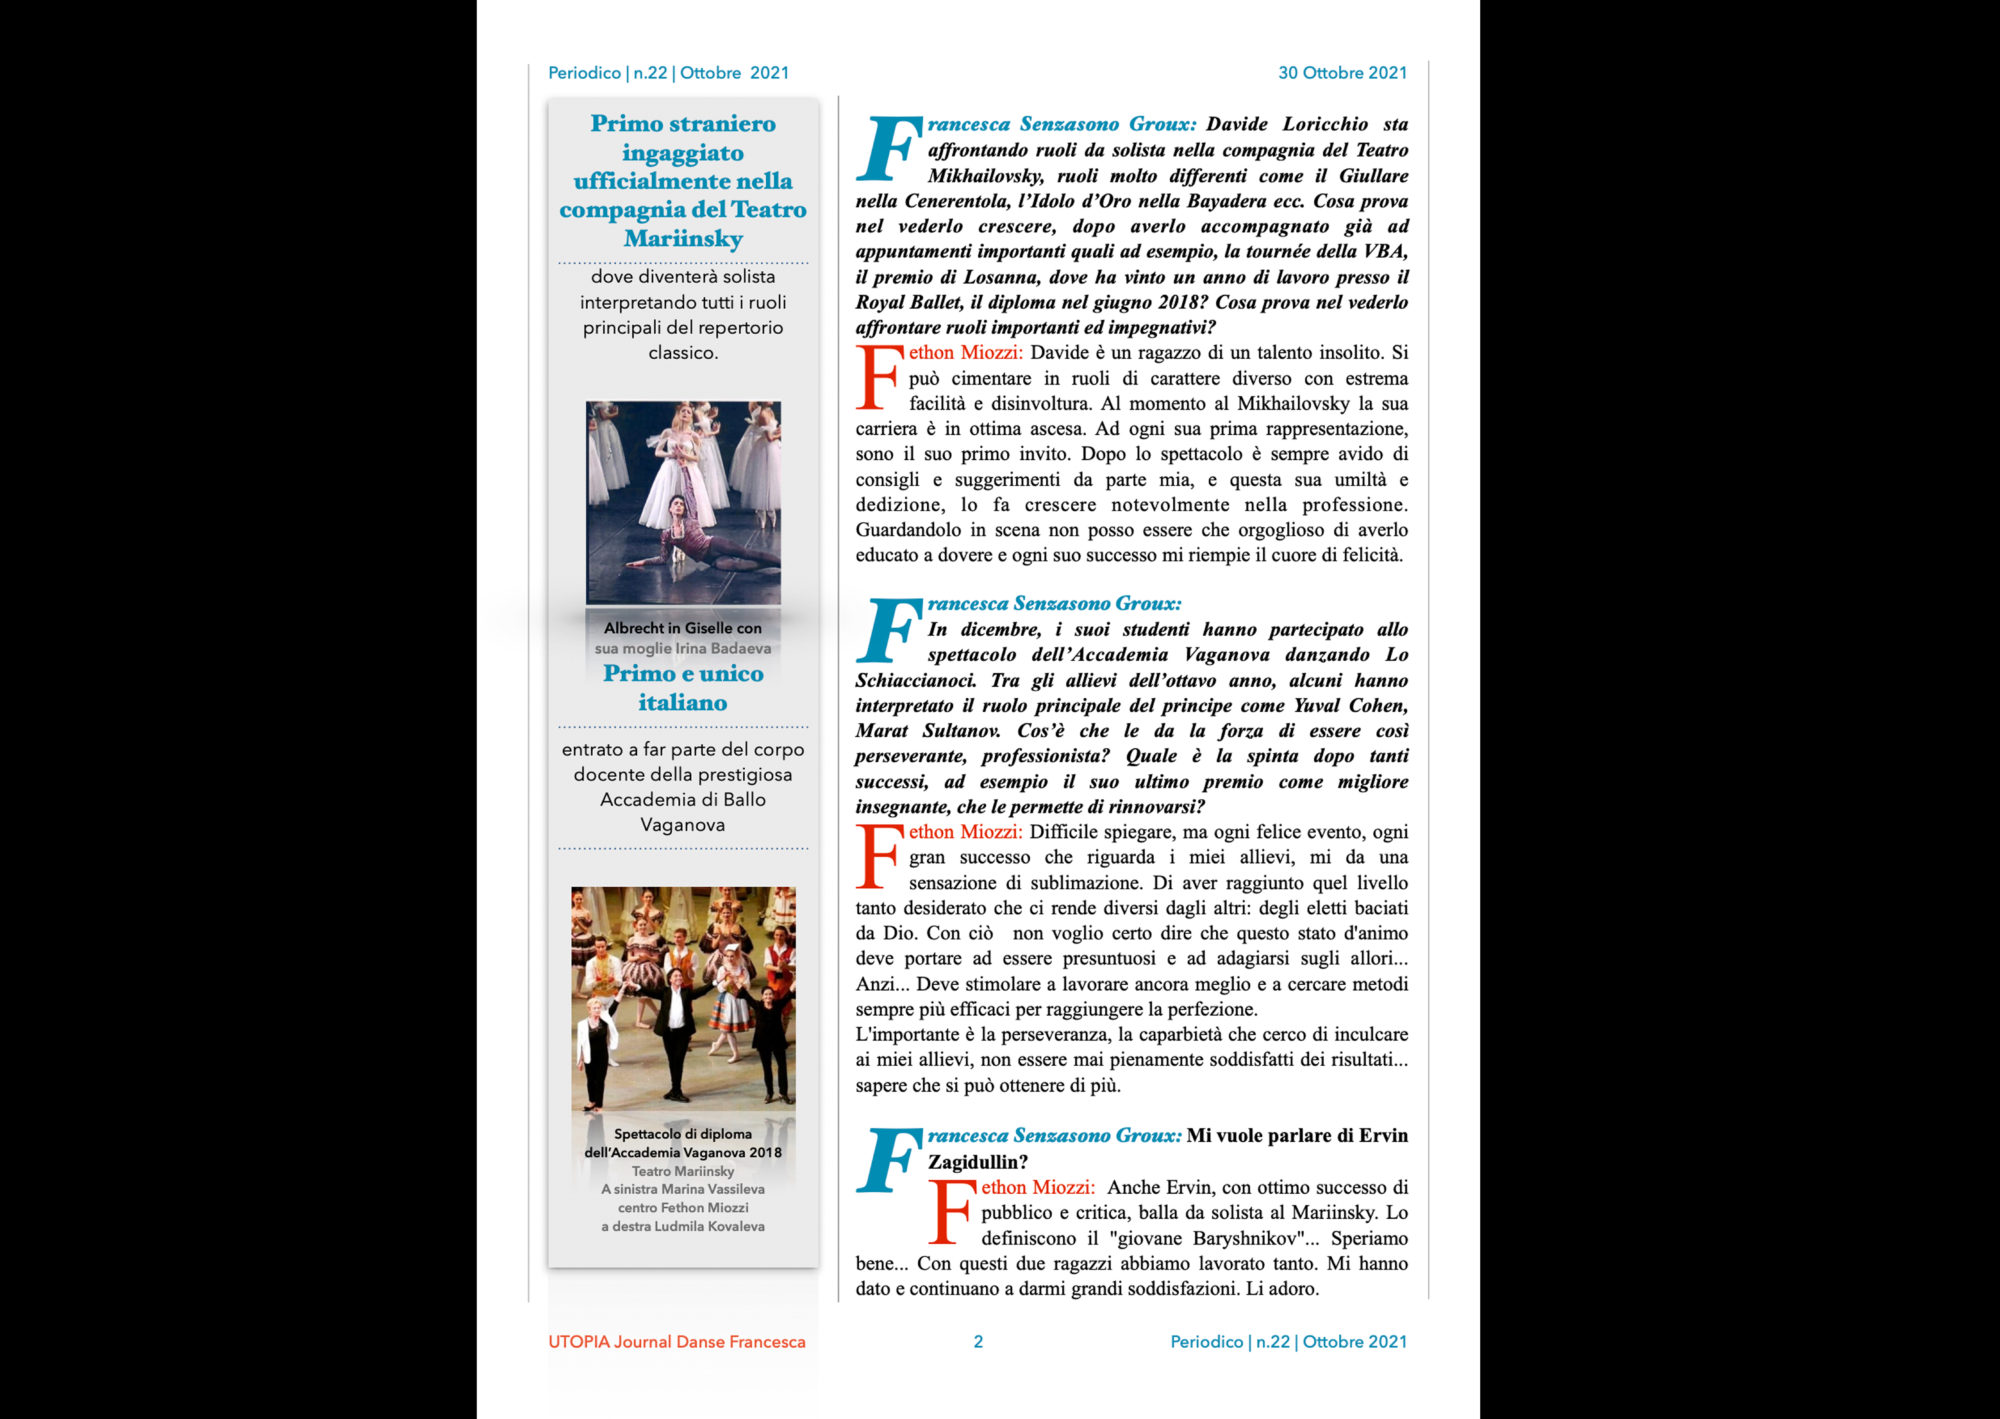  ©UTOPIA Journal Danse Francesca Periodico n° 22 29 Ottobre 2021 pagina 2